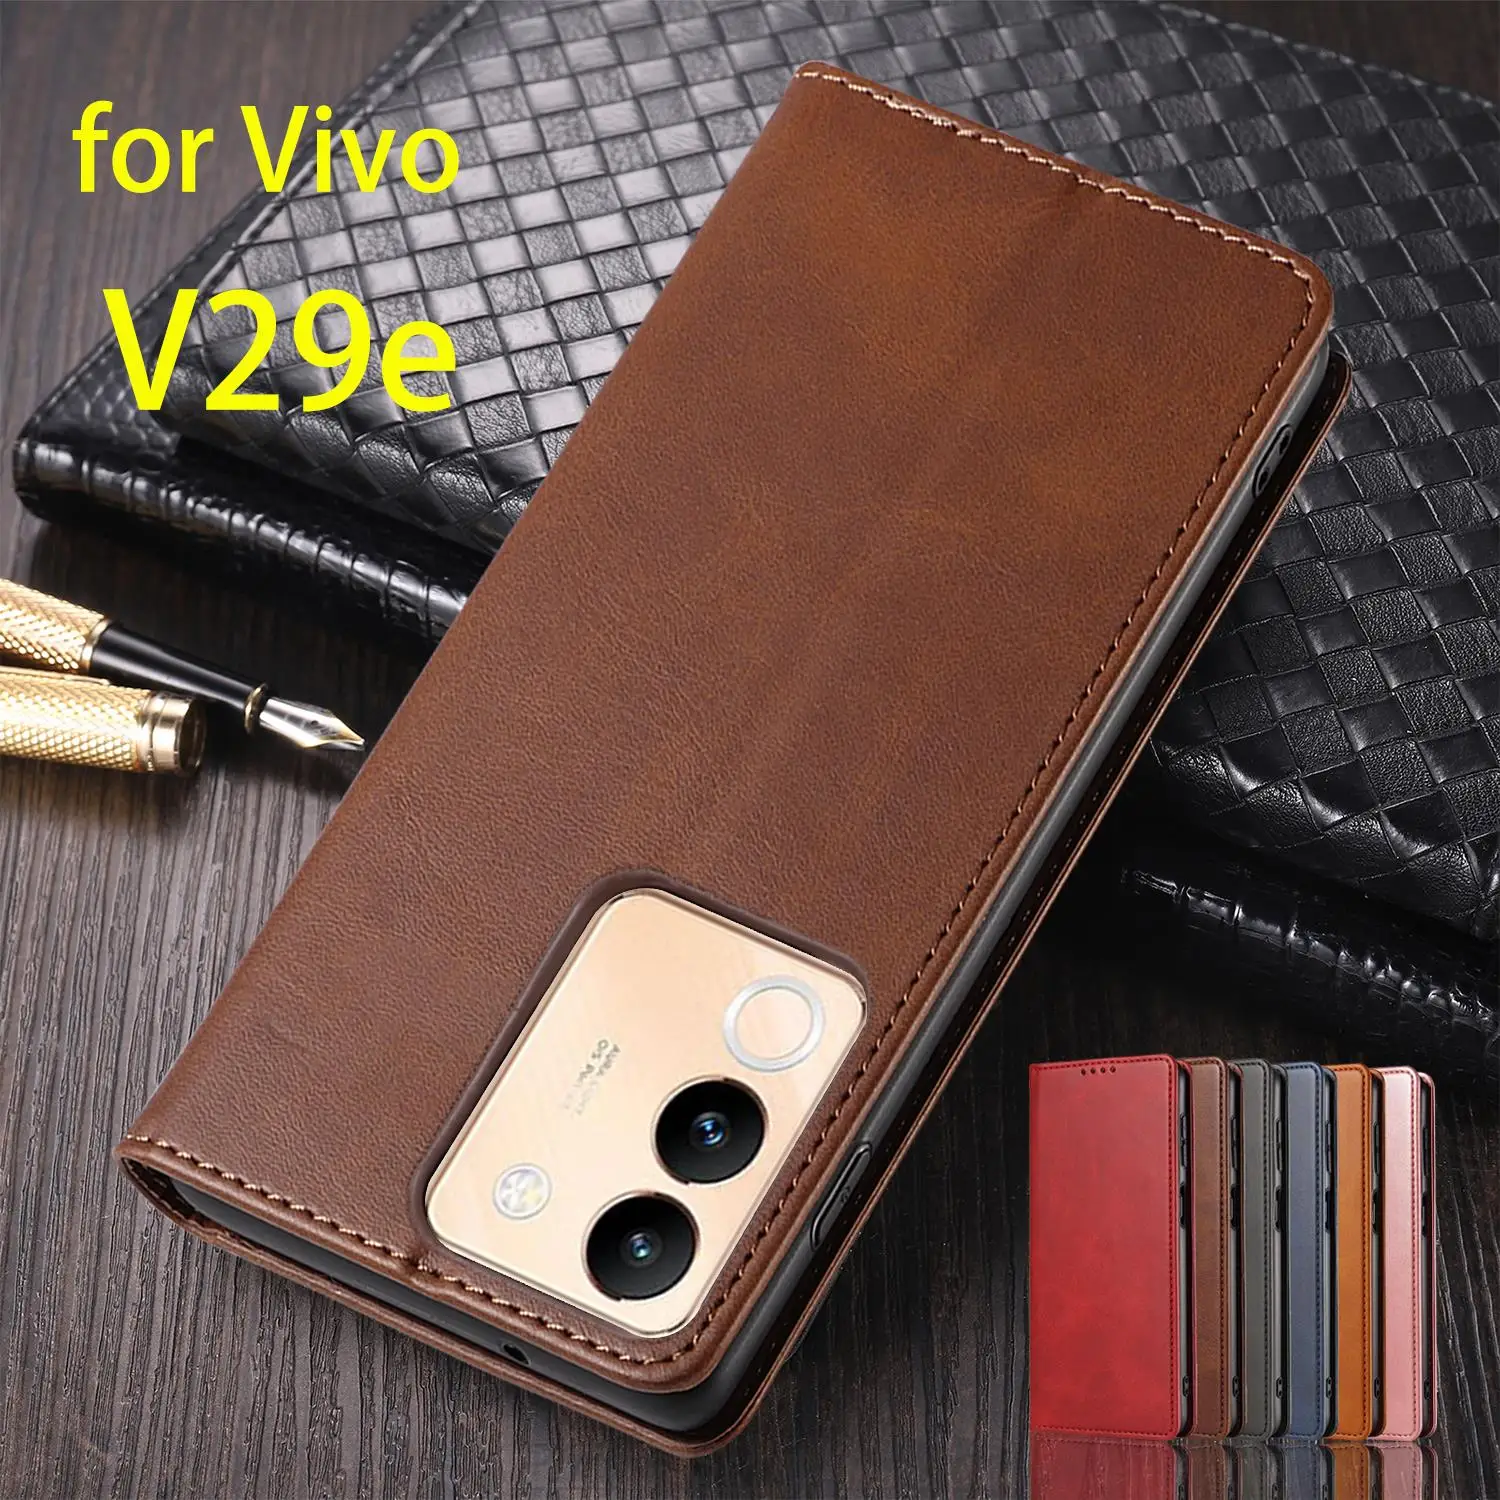 

Leather Case for Vivo V29e ( Global EUR RUS ) Flip Case Card Holder Holster Magnetic Attraction Cover Wallet Case Fundas Coque